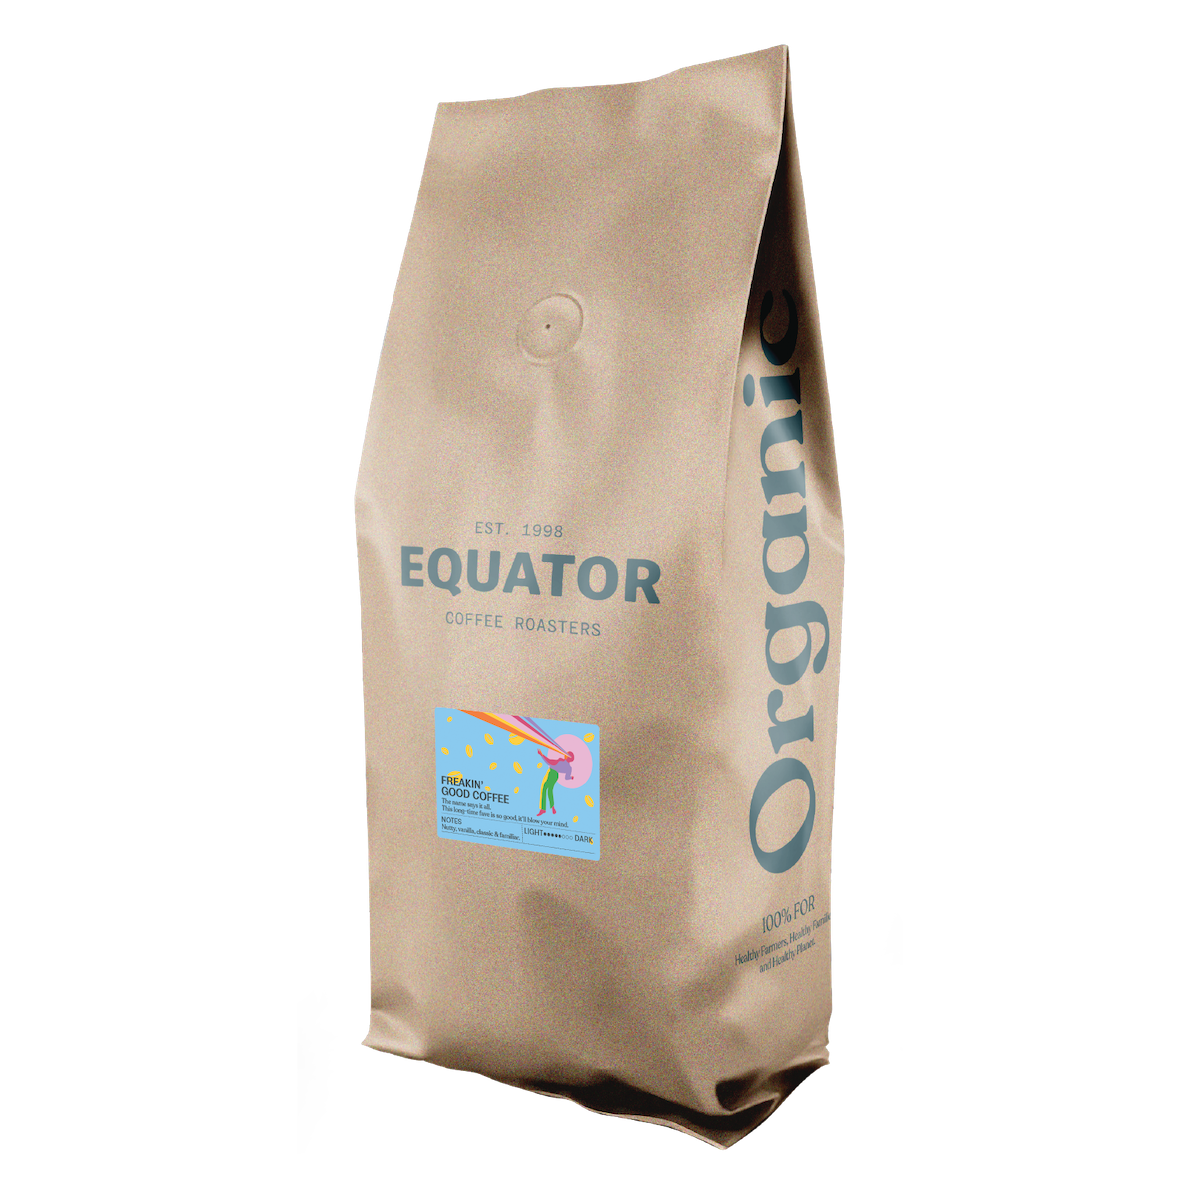 5lb bag of Freakin' Good Coffee from Equator Coffee Roasters Inc.